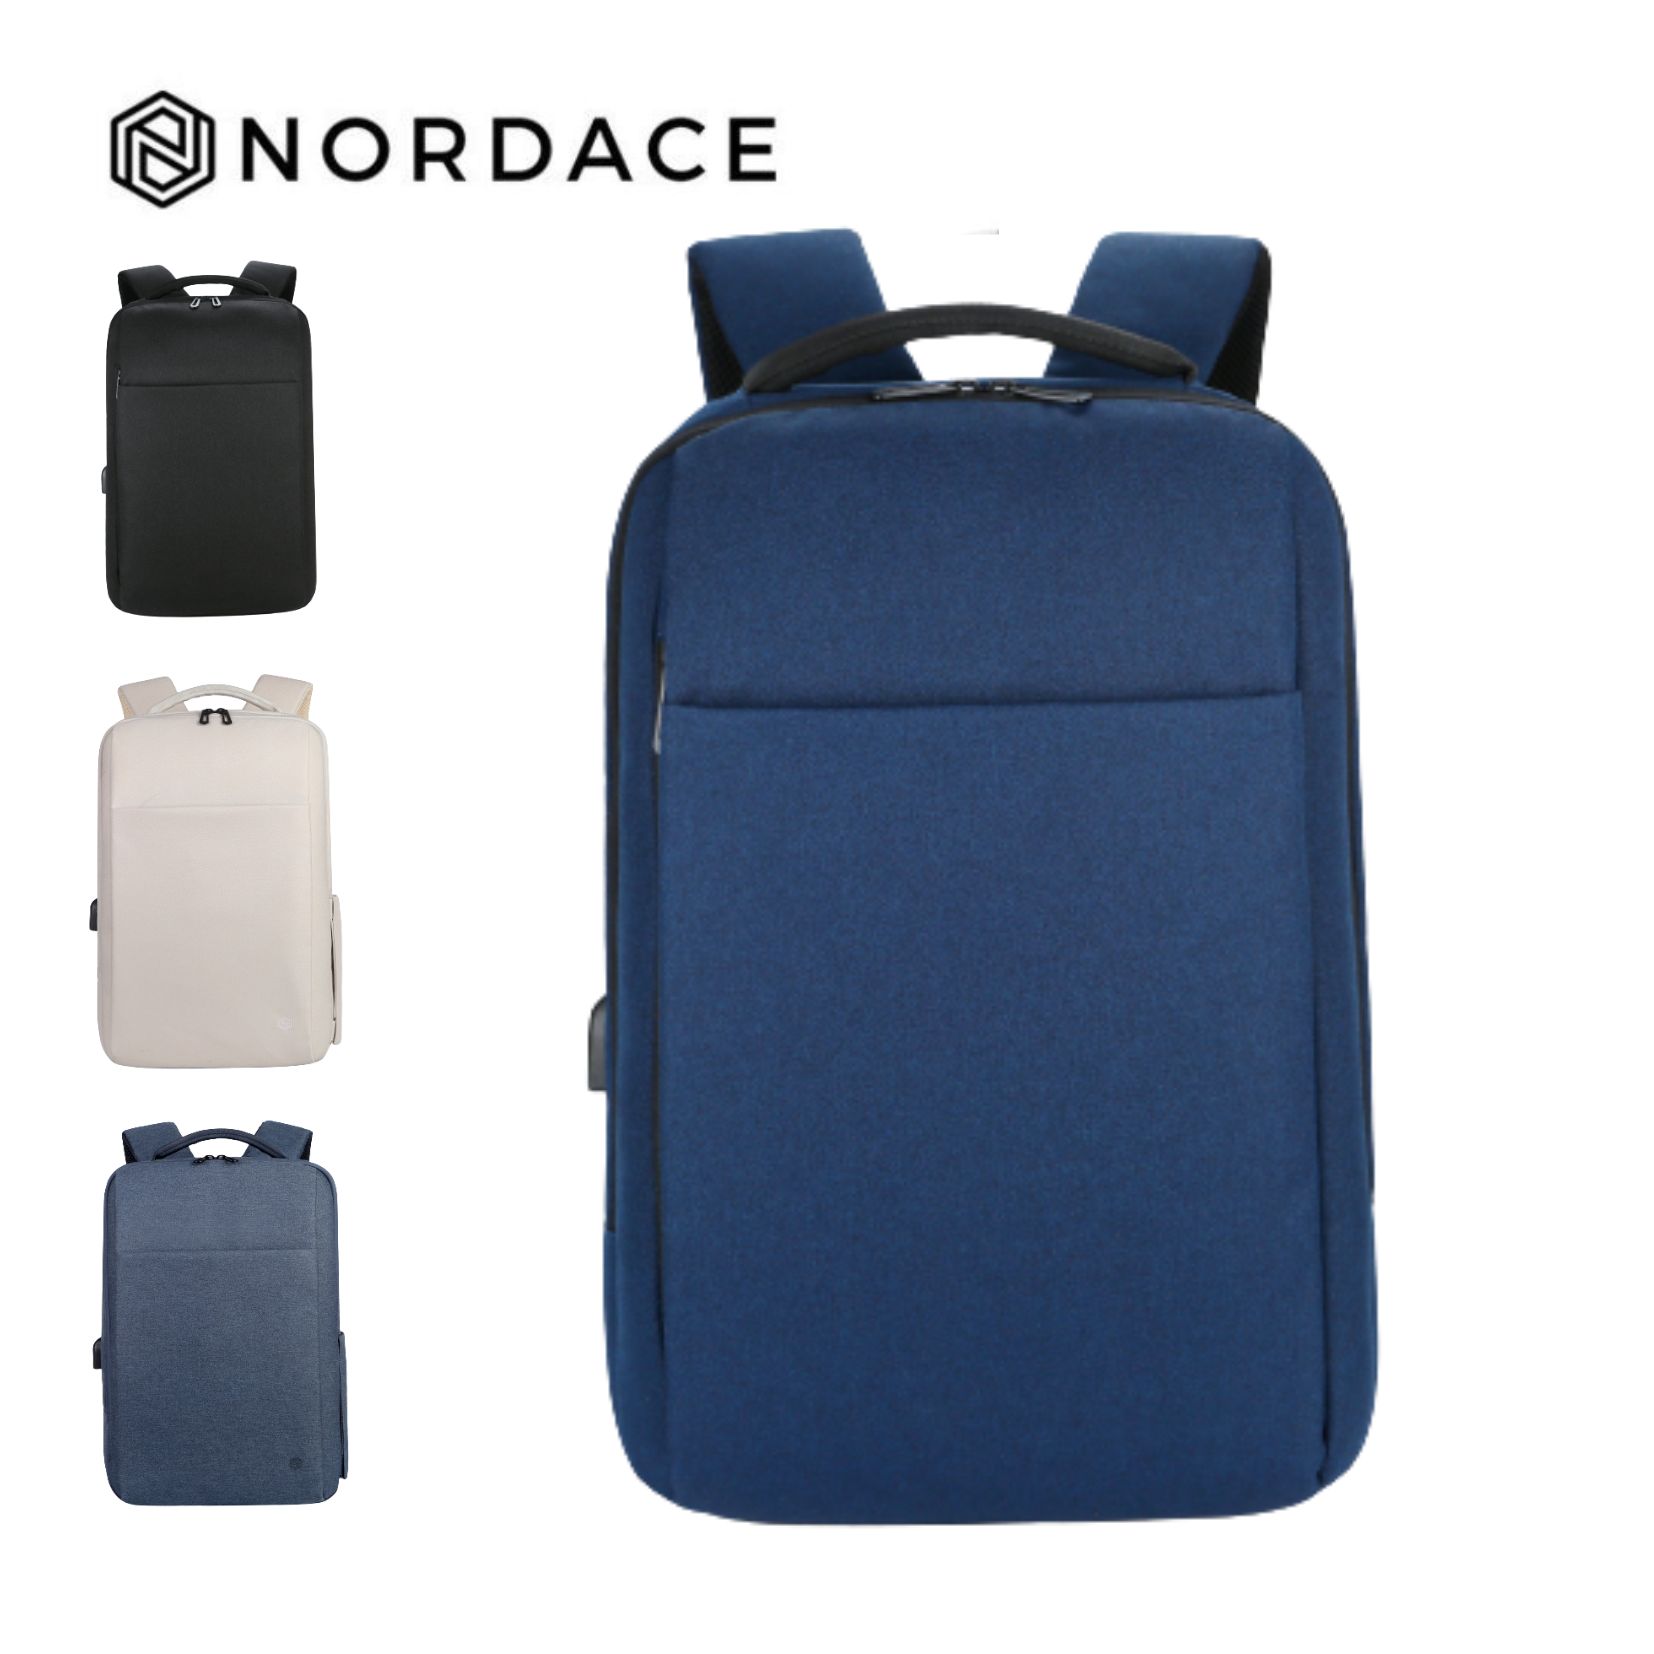 Nordace Bergen -後背包 斜背包 手提包 胸包 側背包 旅行包 工作包 四色可選-藍色